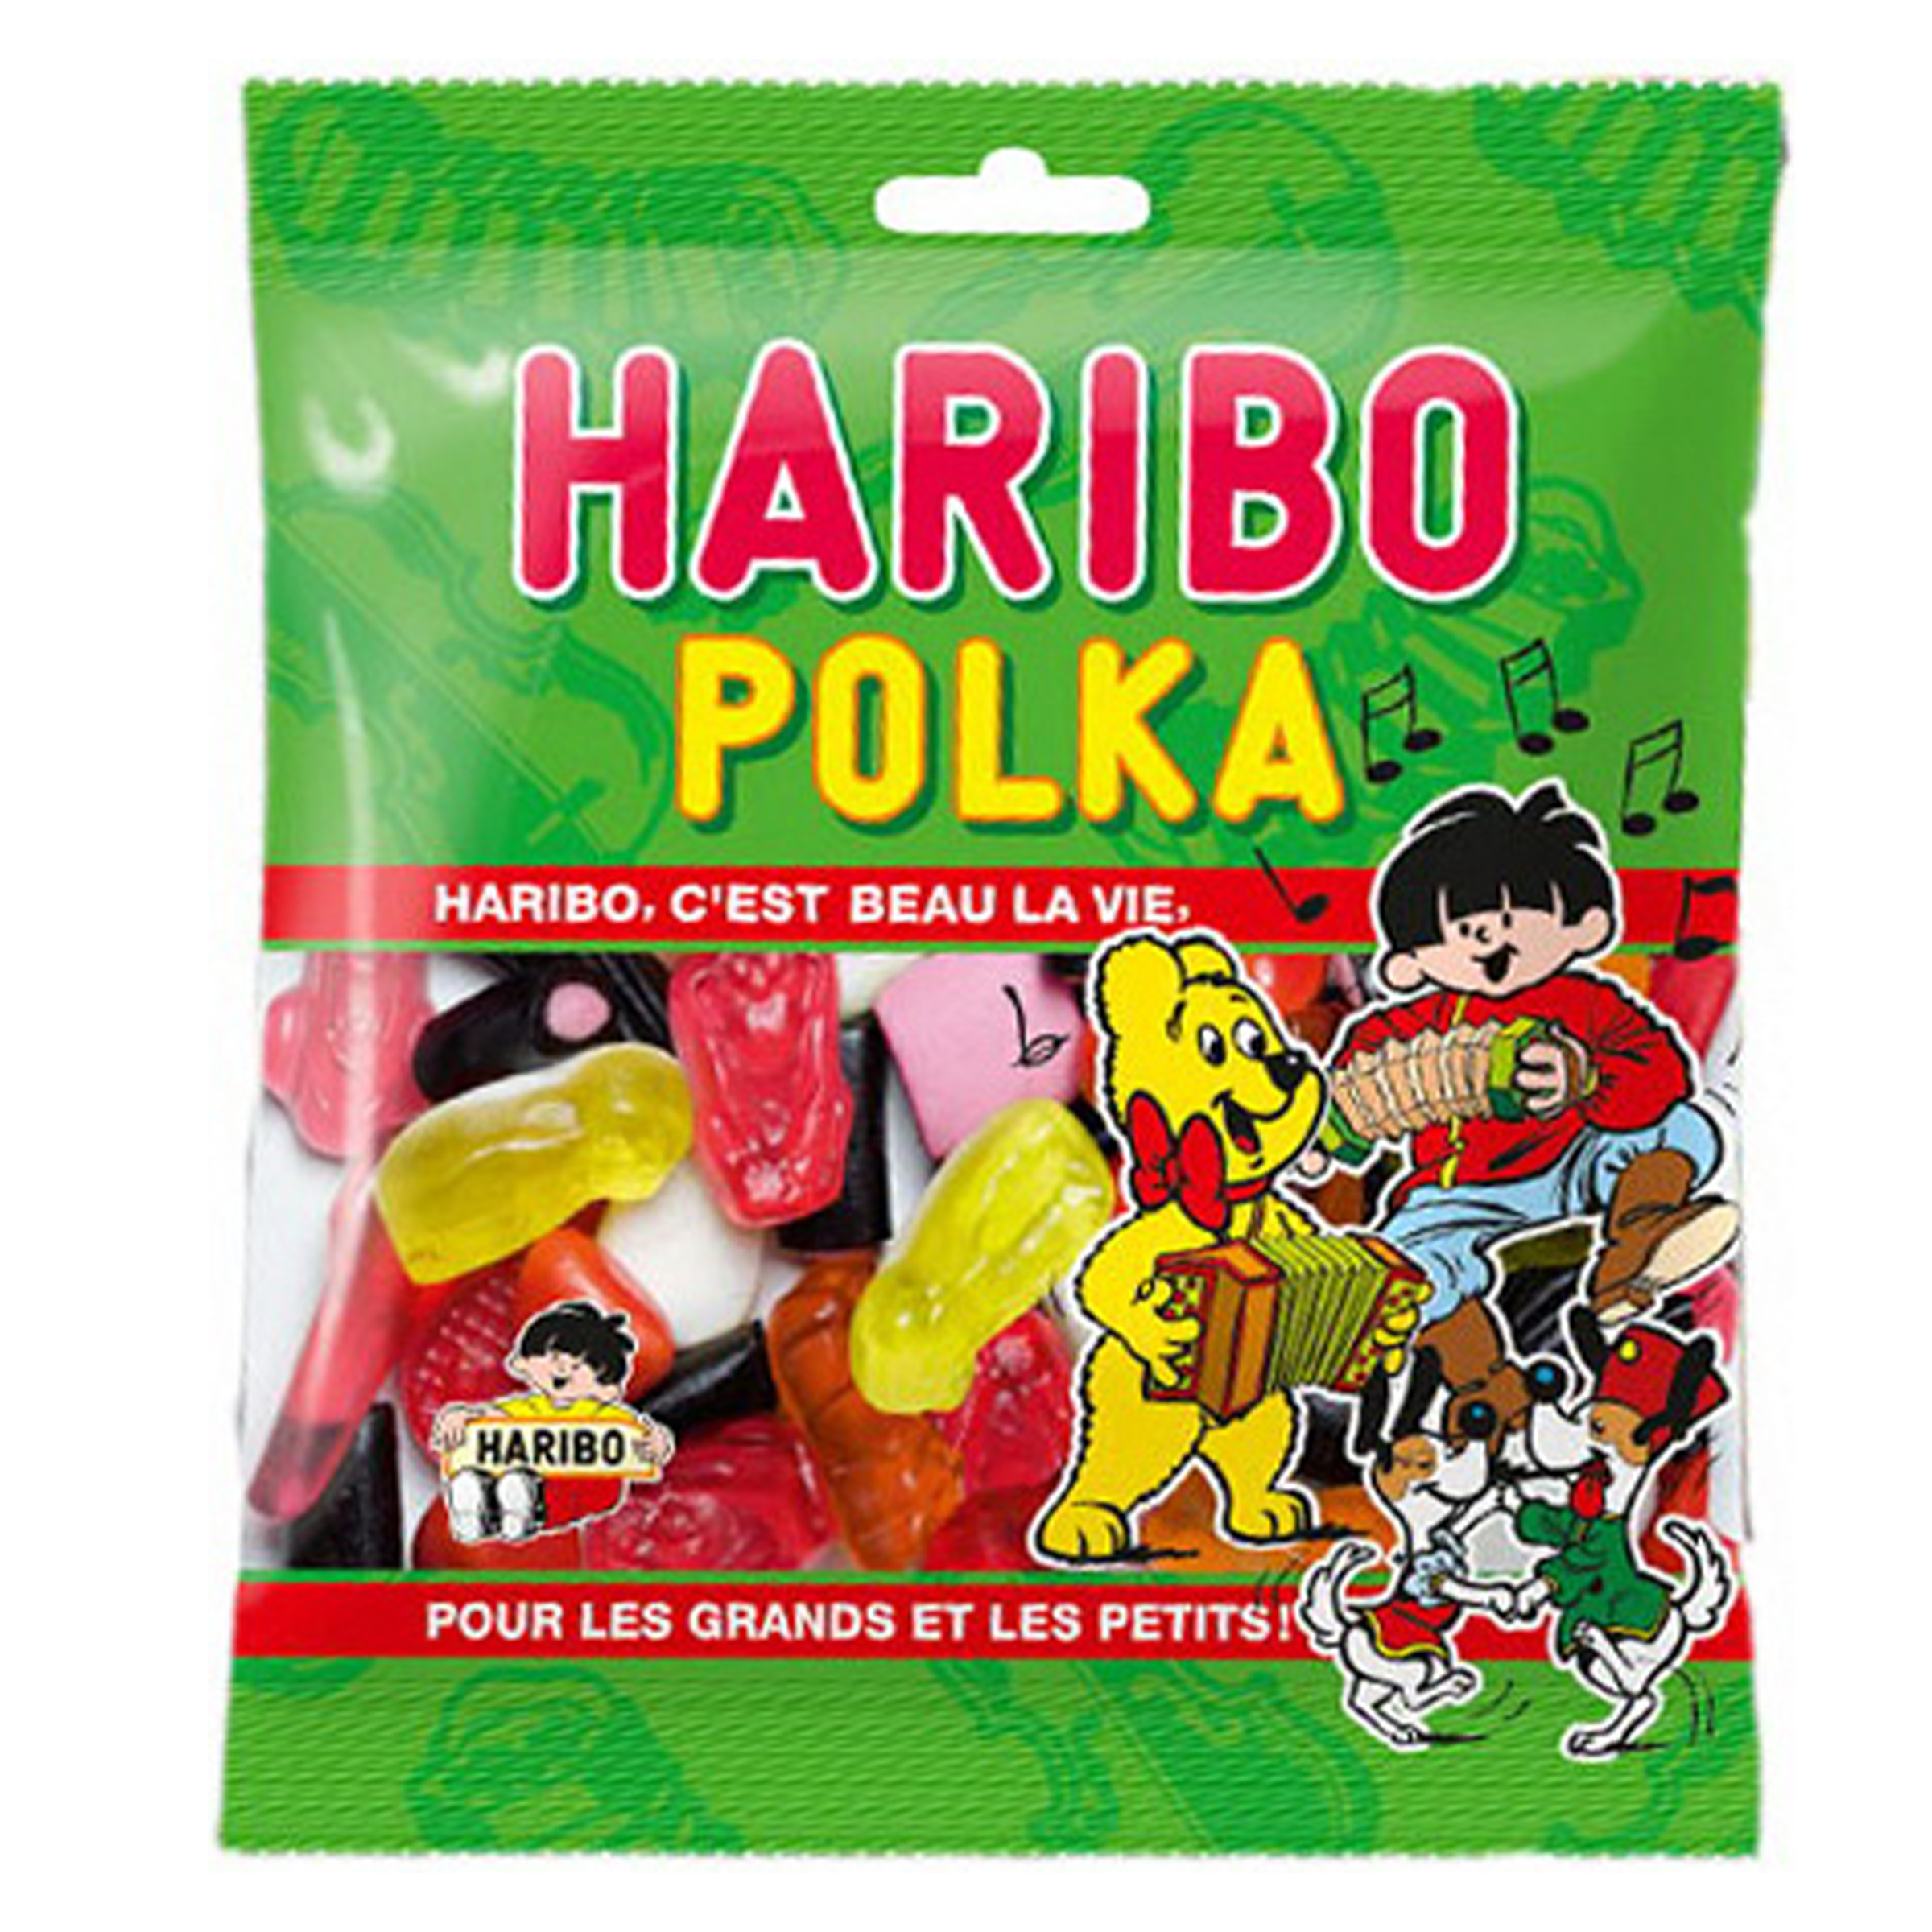 Haribo - Polka (Europe)